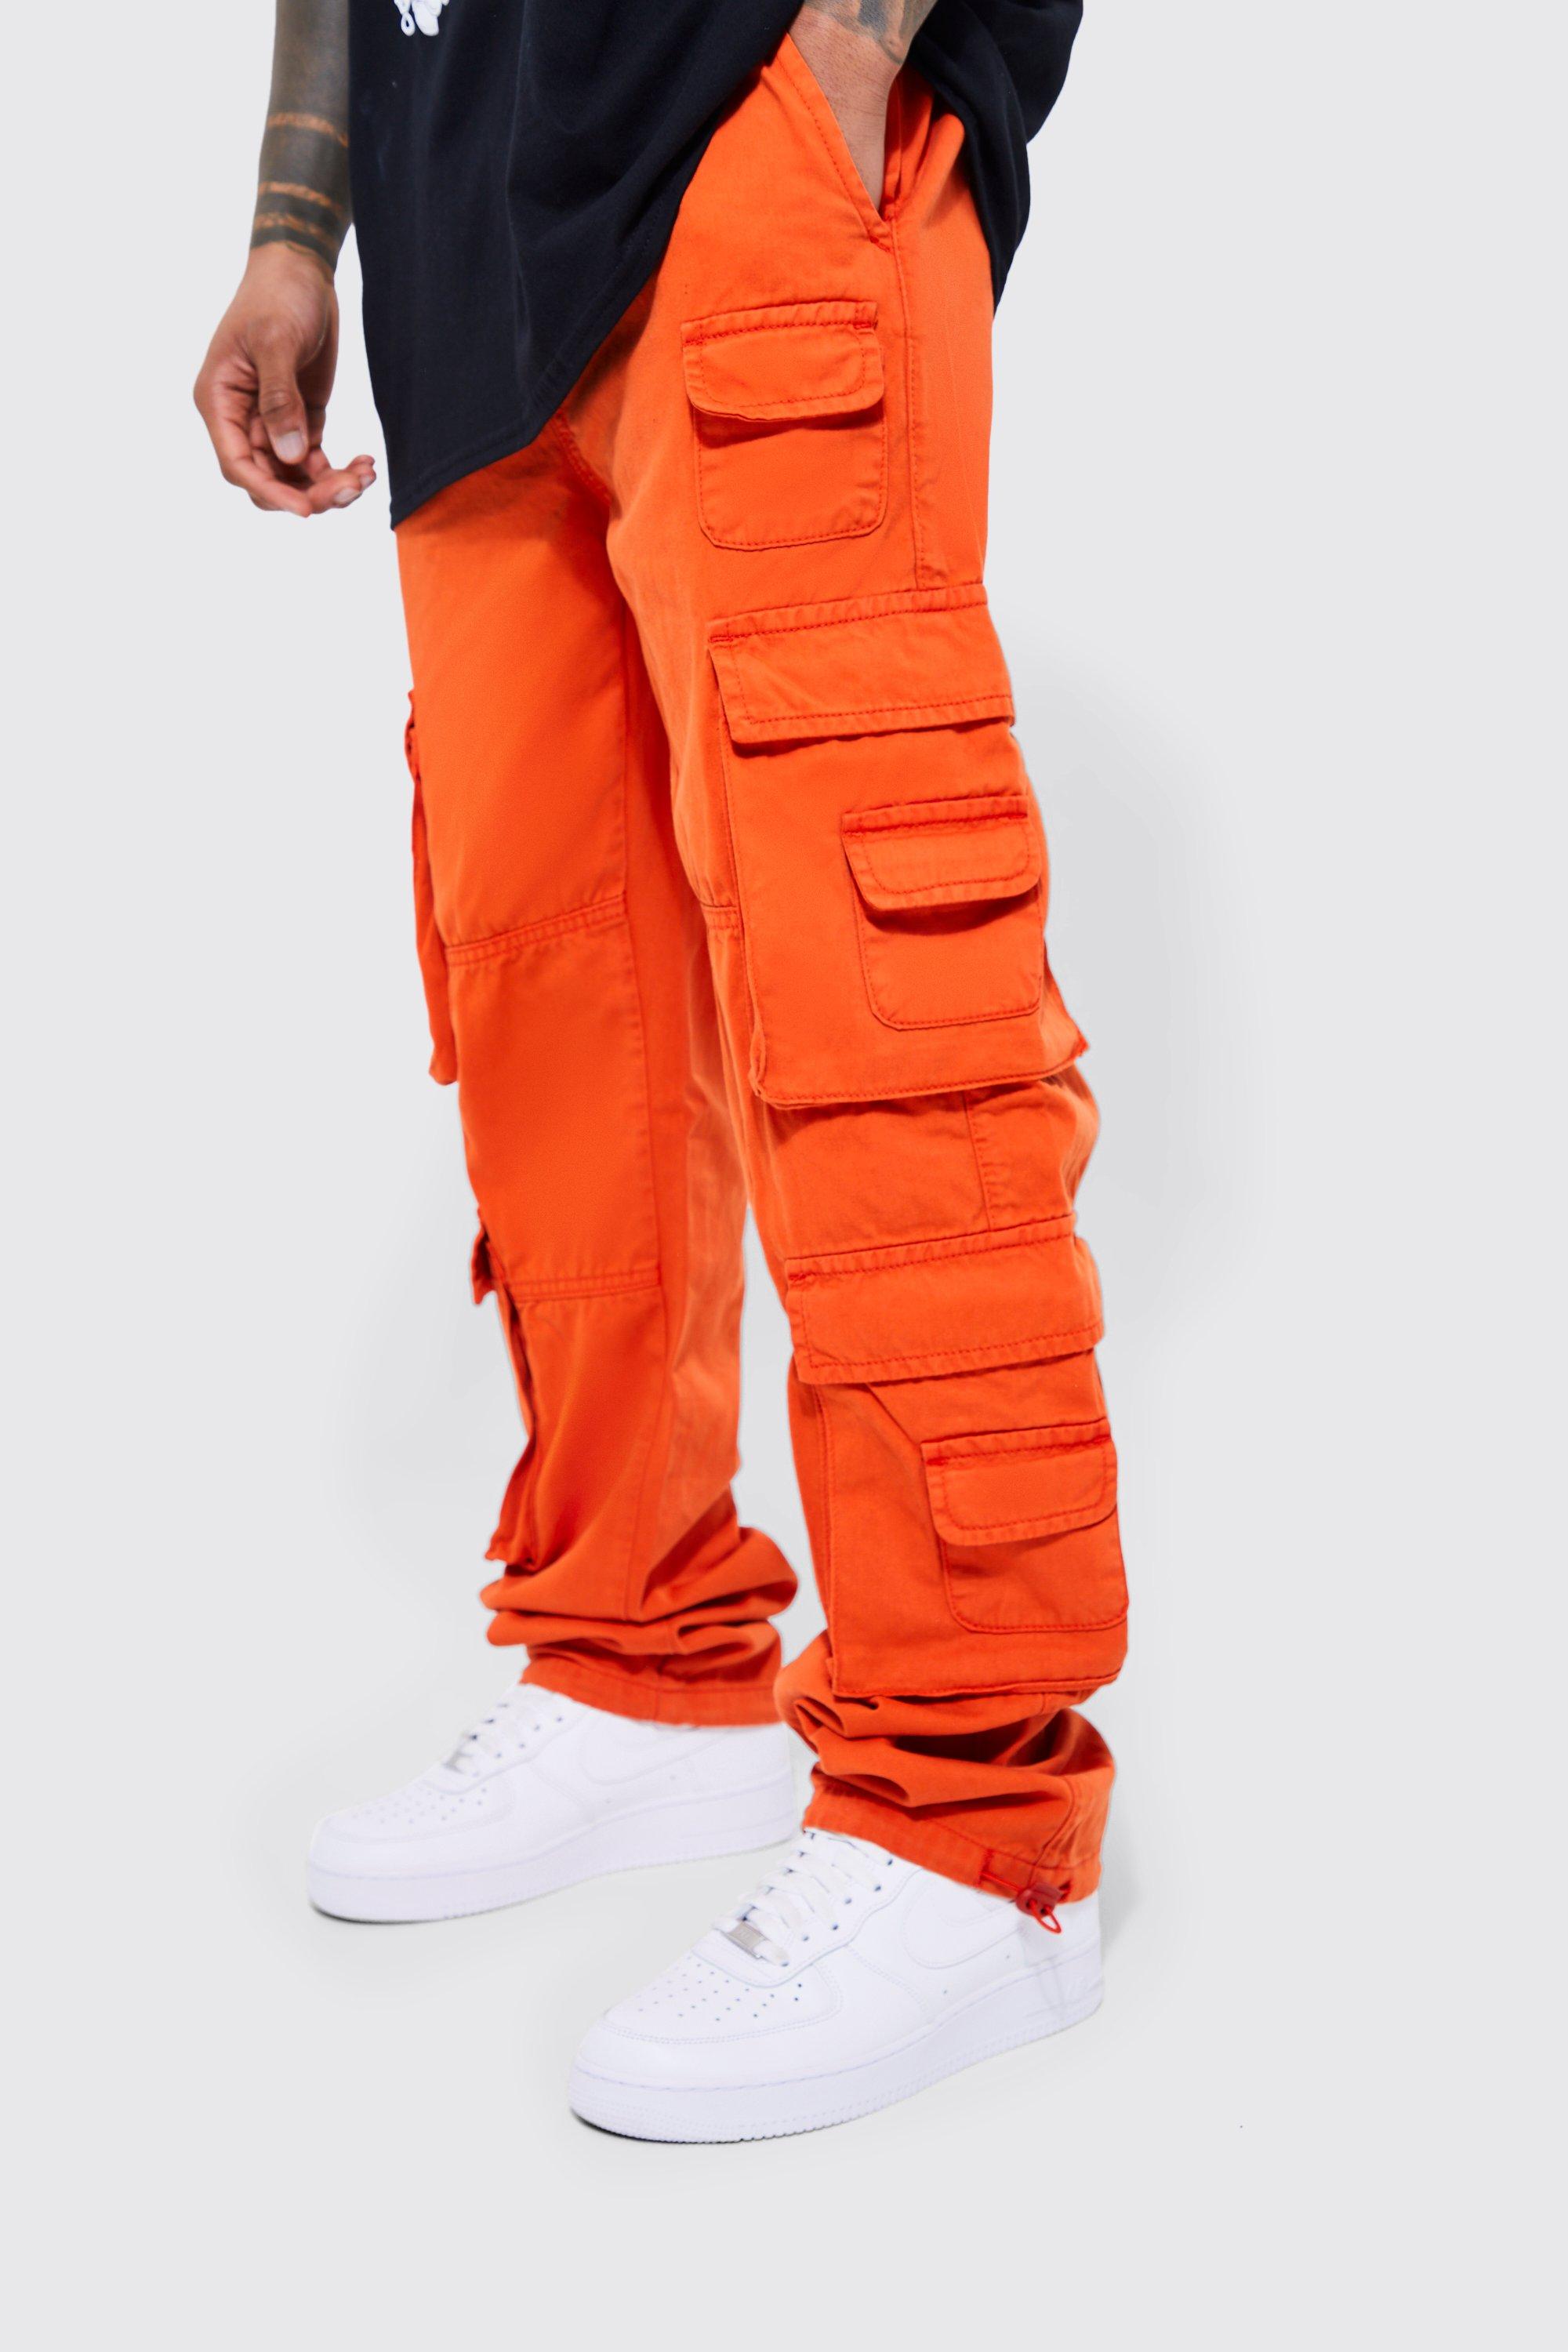 pantalon cargo droit homme - orange - m, orange